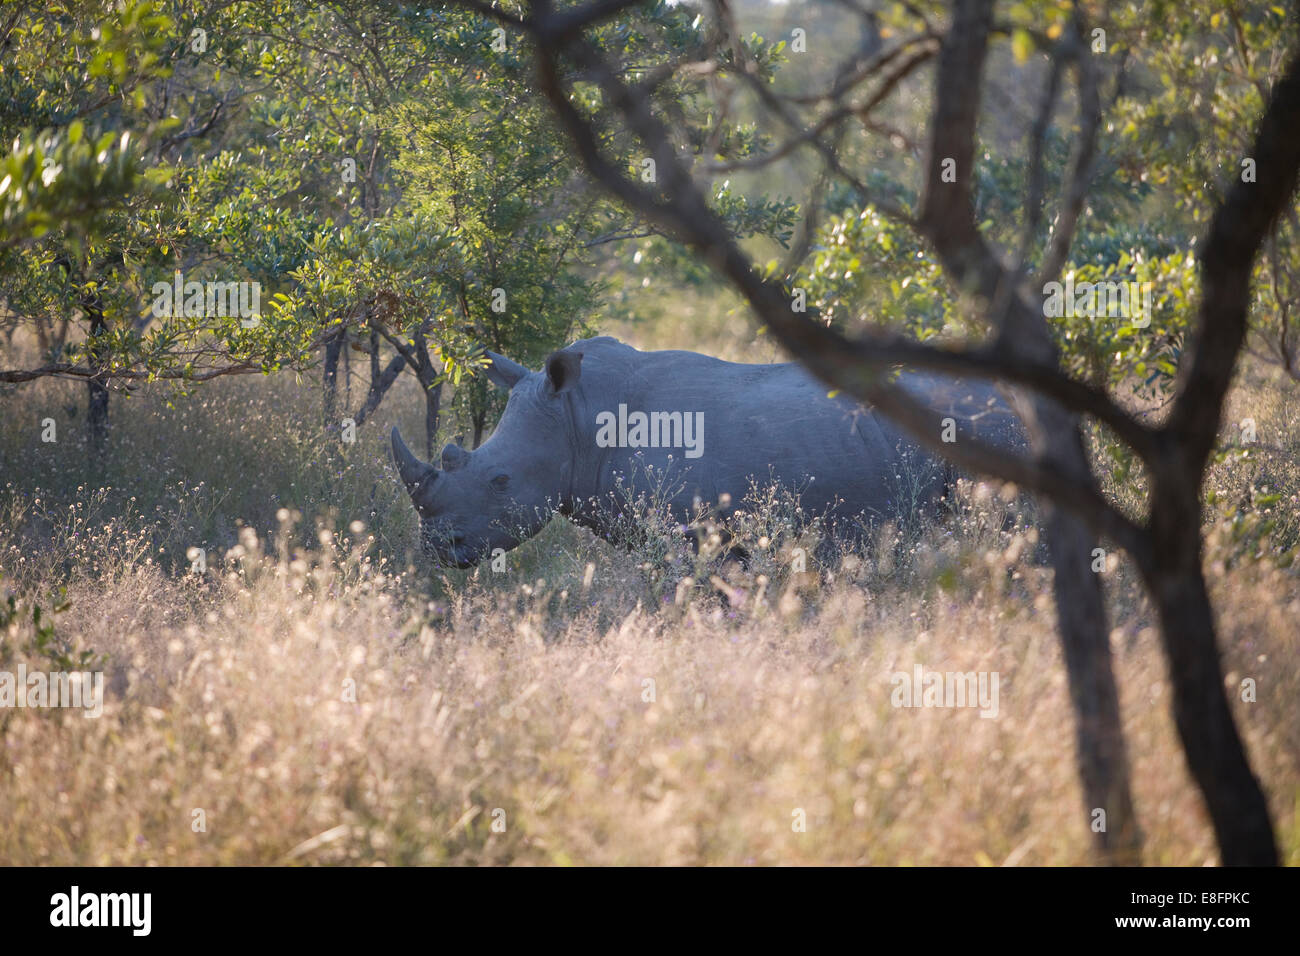 South Africa, Rhinoceros in bush Stock Photo